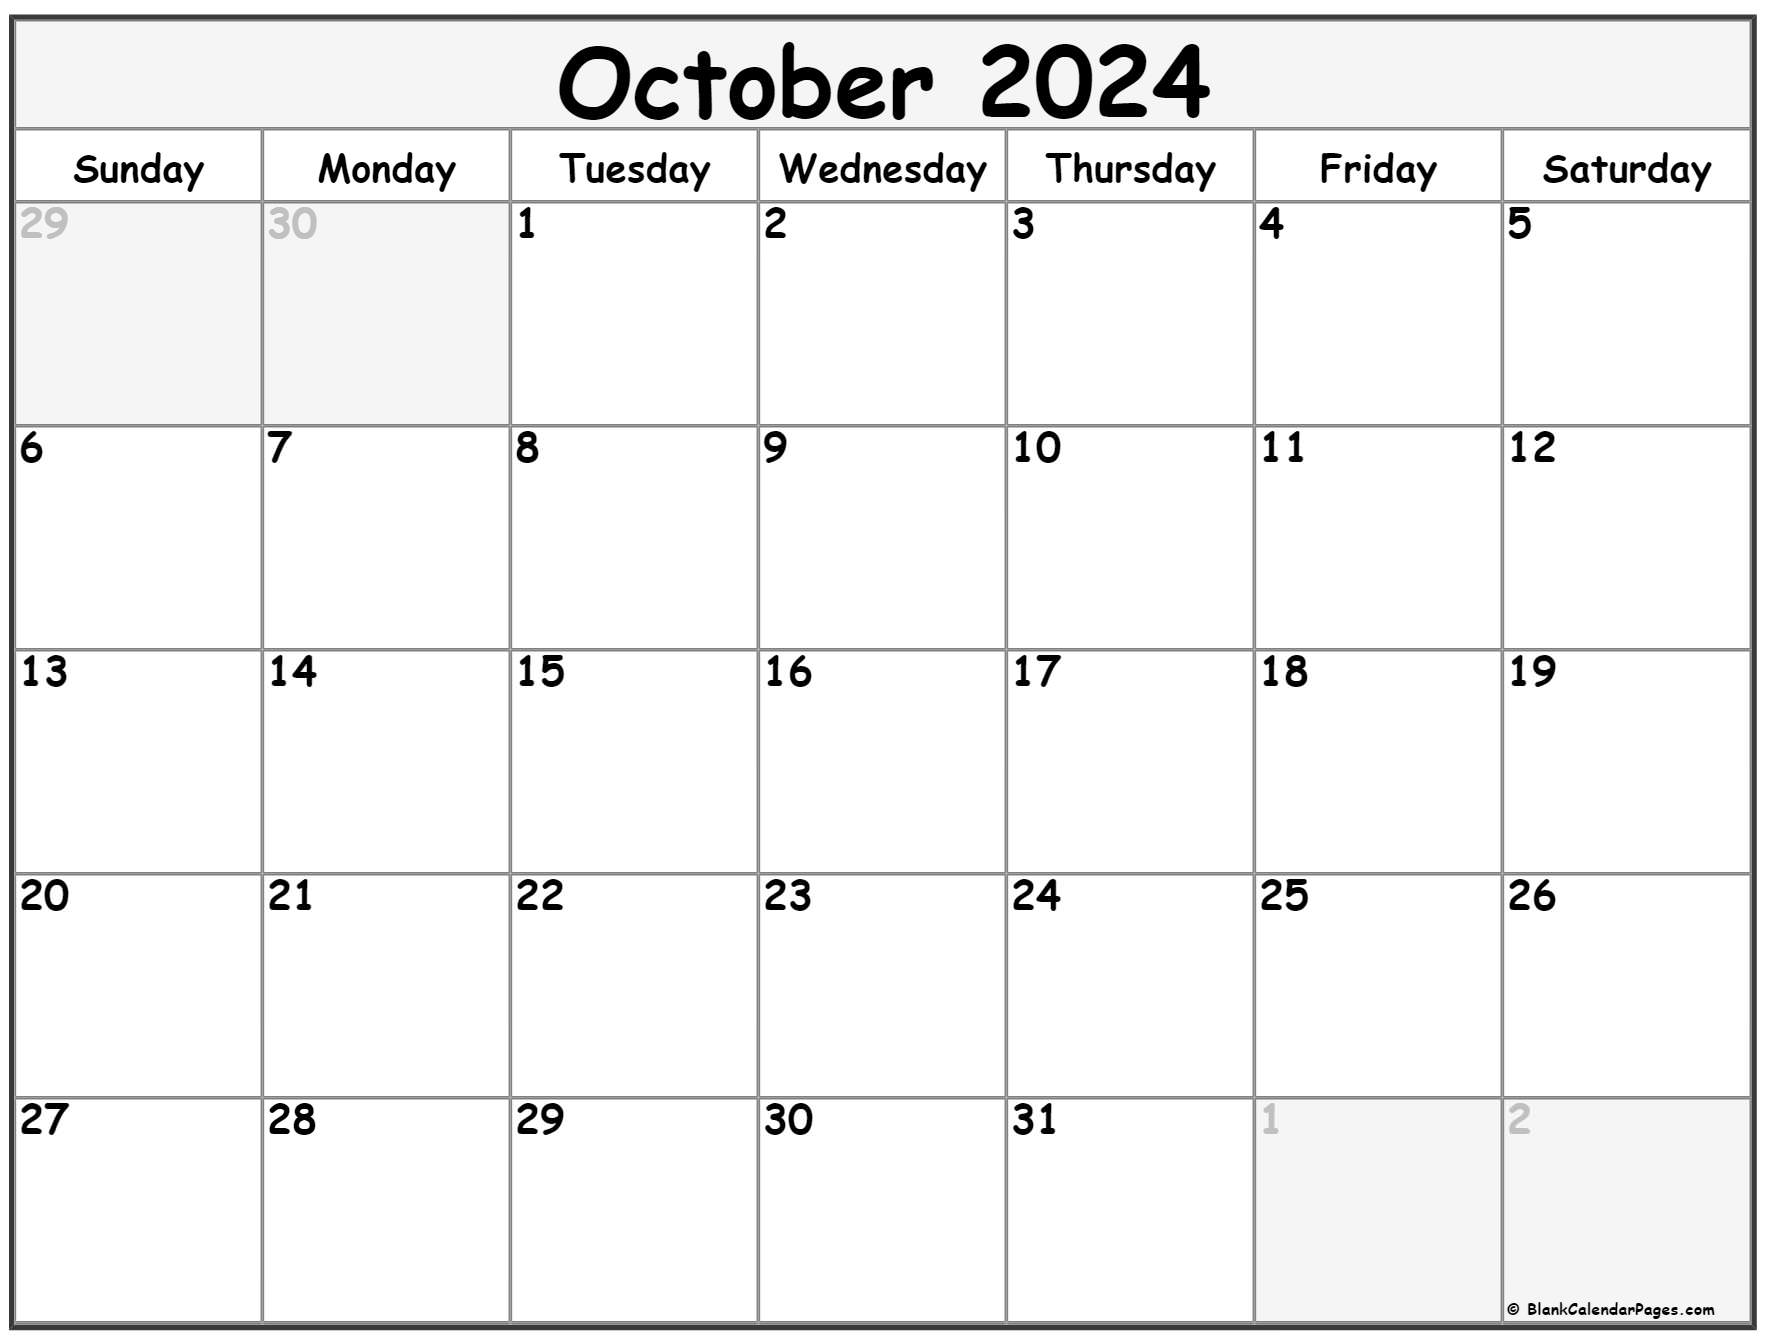 October 2022 calendar | free printable monthly calendars